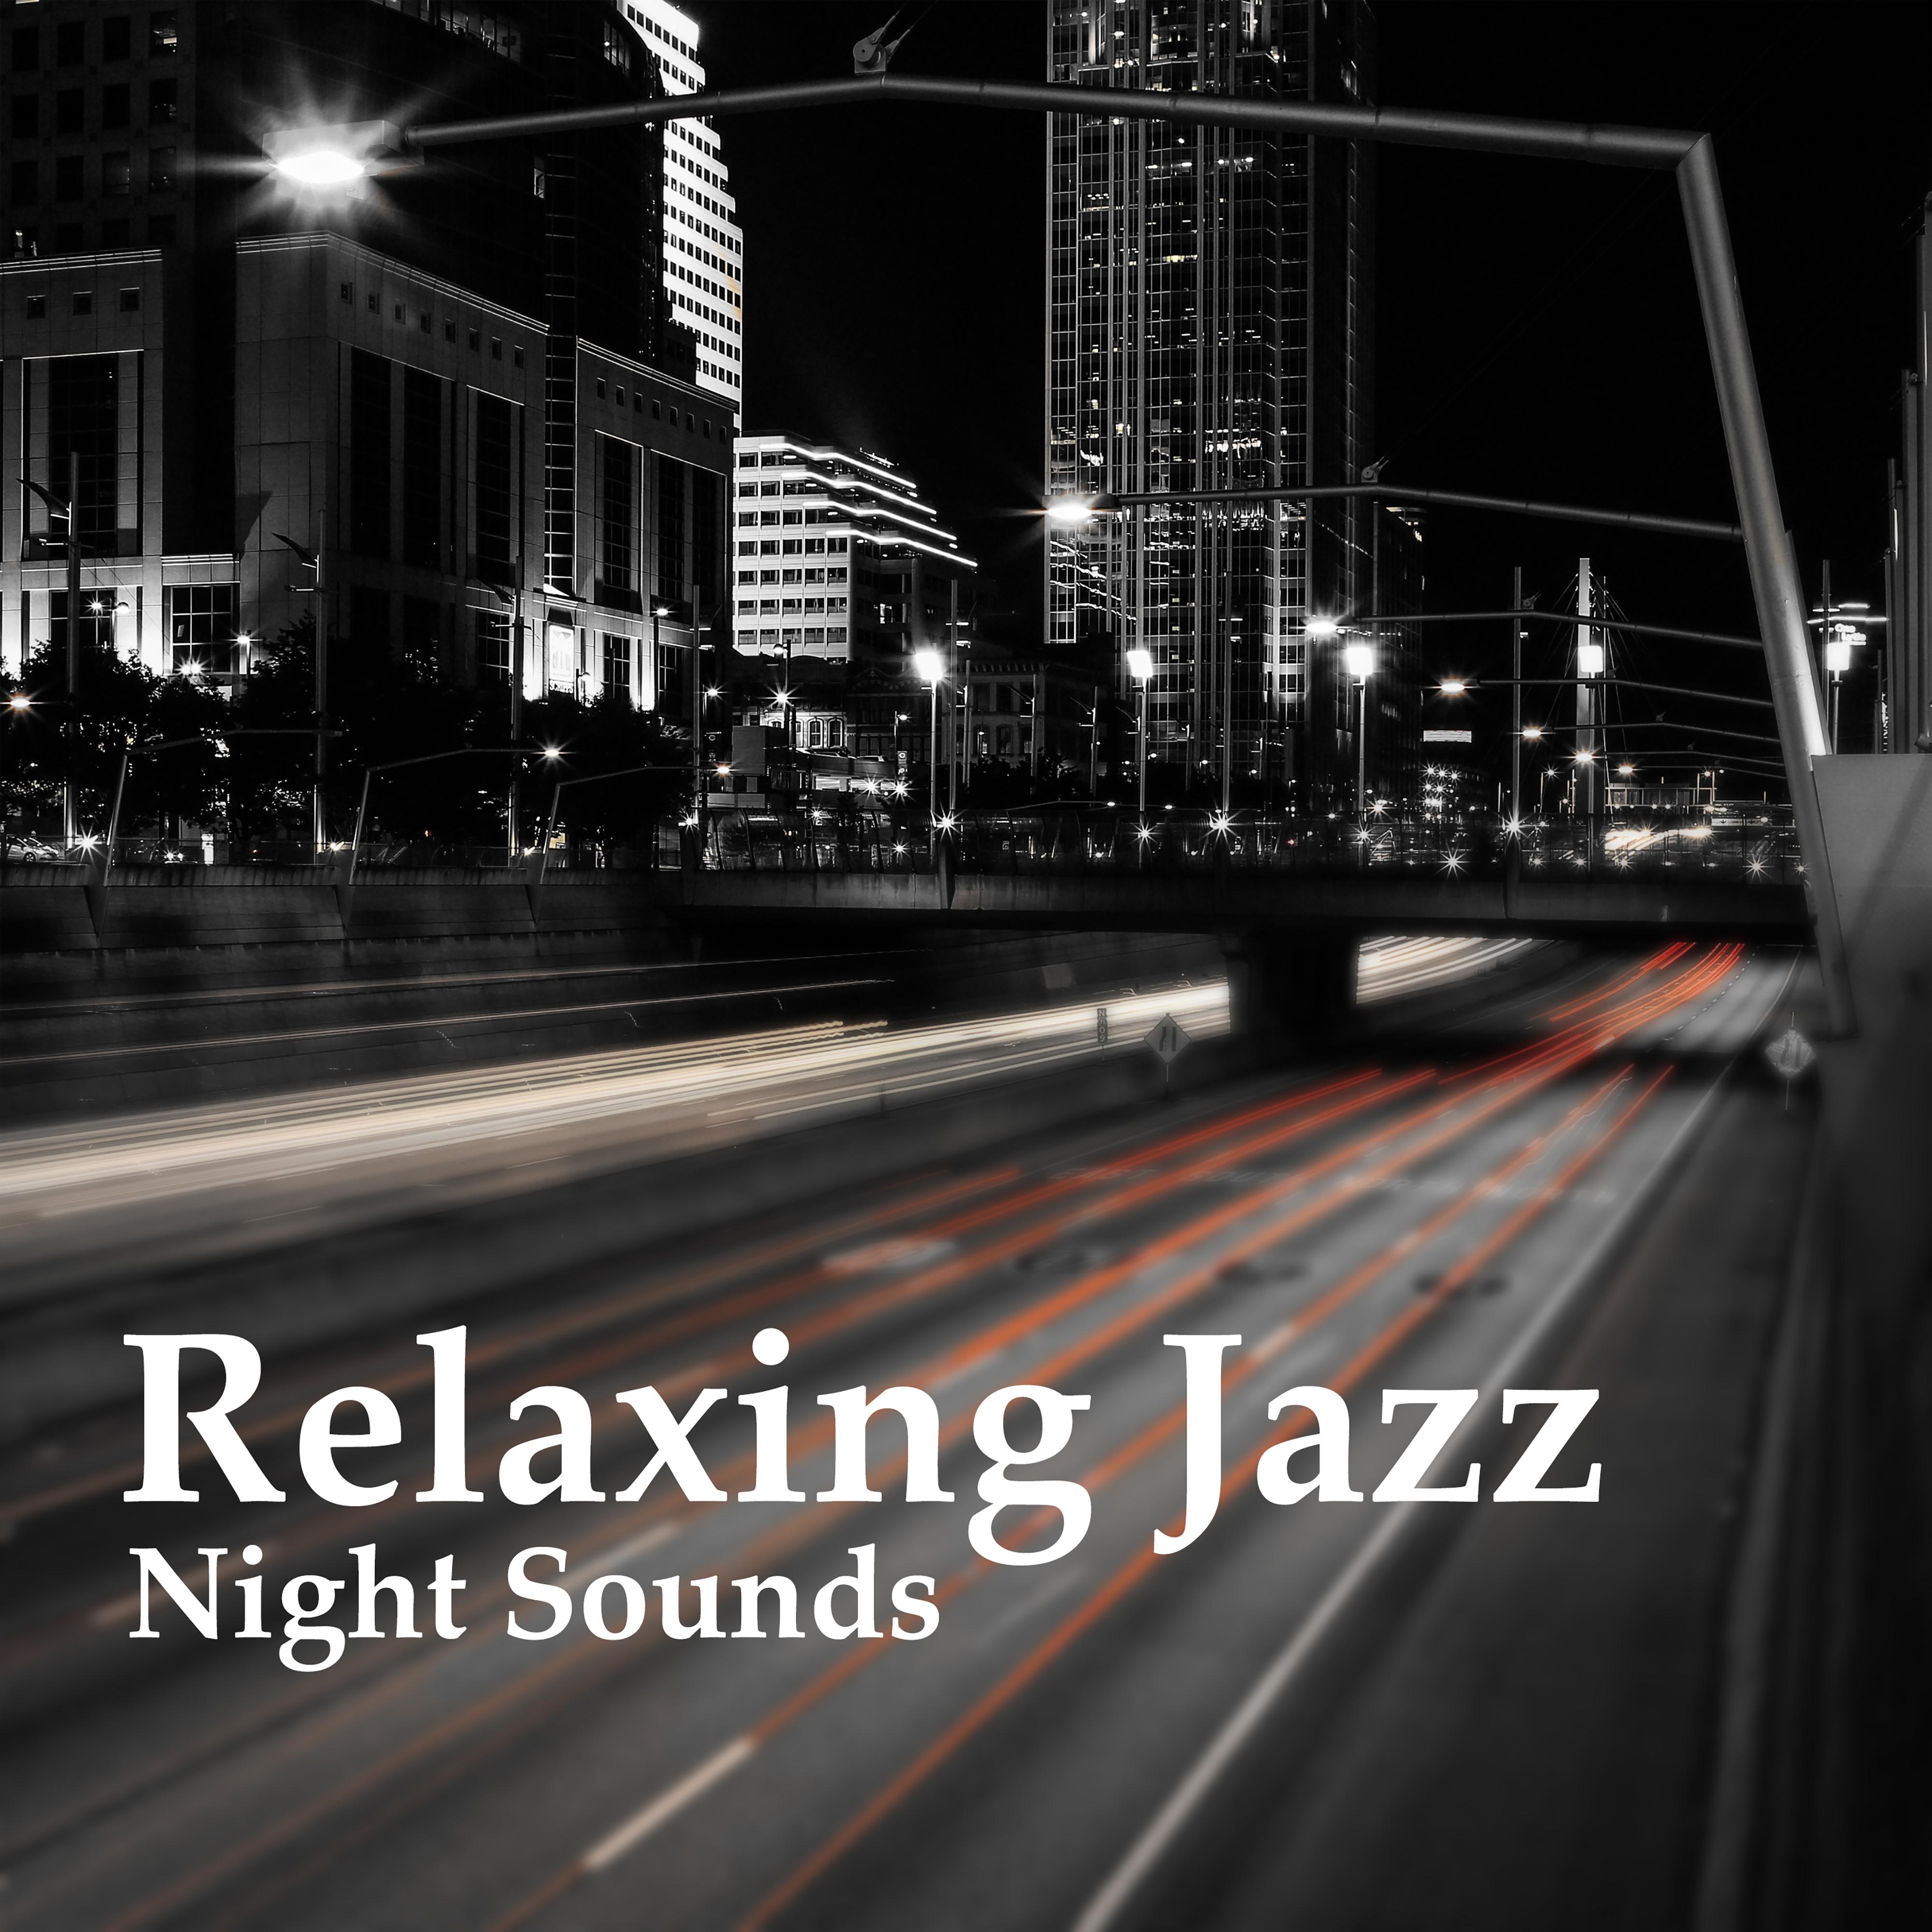 Relaxing Jazz Night Sounds  Smooth Jazz, Relaxing Piano Bar, Night Jazz Club, Chilled Music, Moonlight Jazz